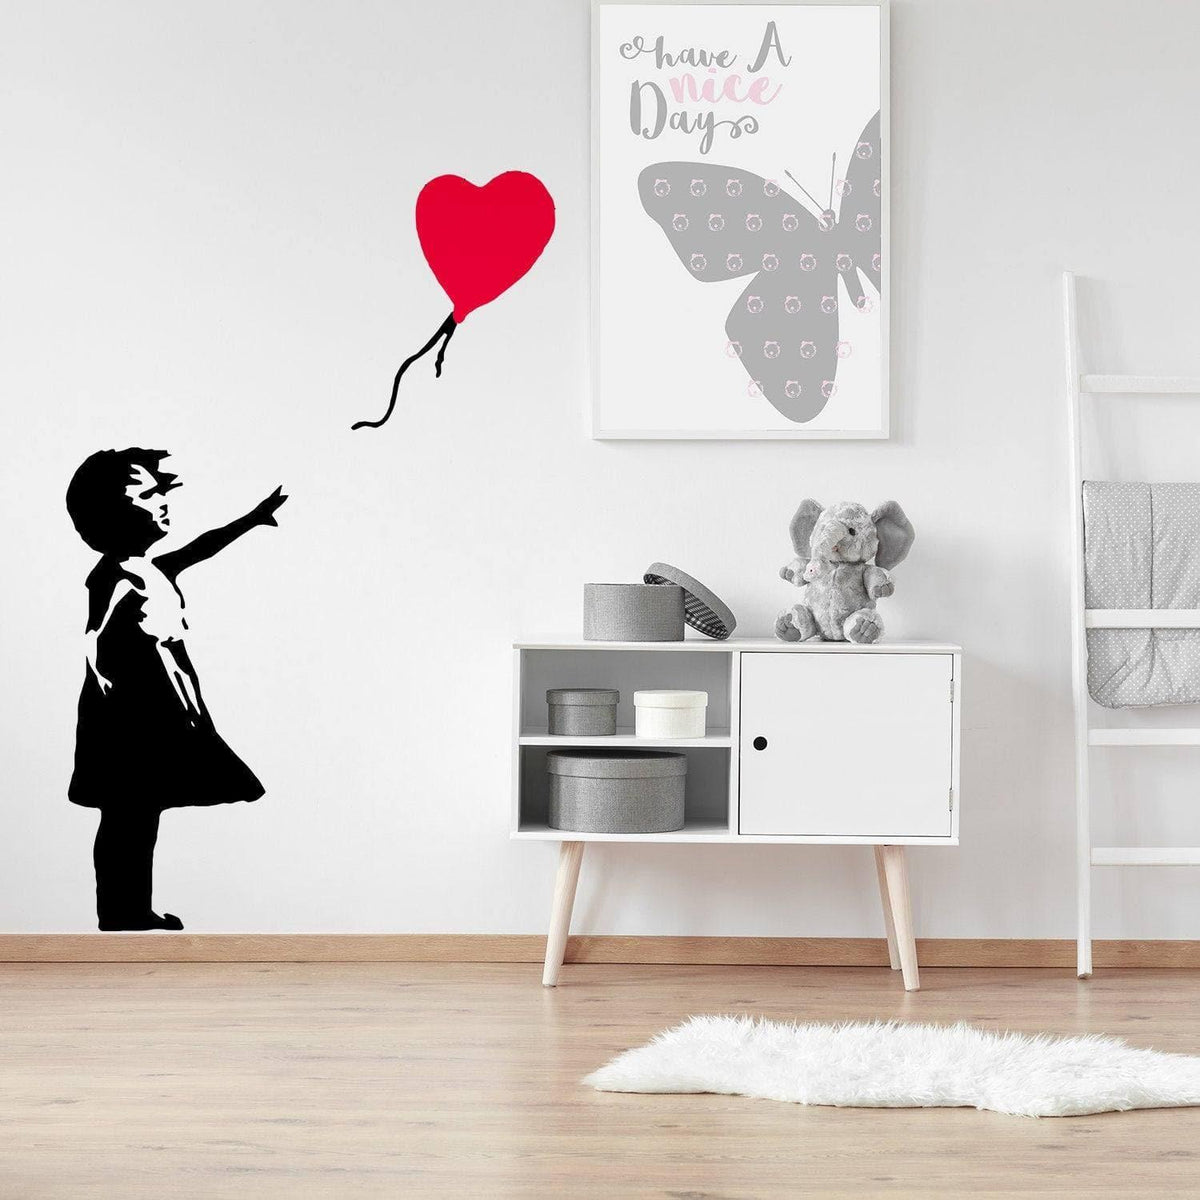 Banksy Girl with Heart Balloon Wall Sticker - Vinyl Decal 5 x 8